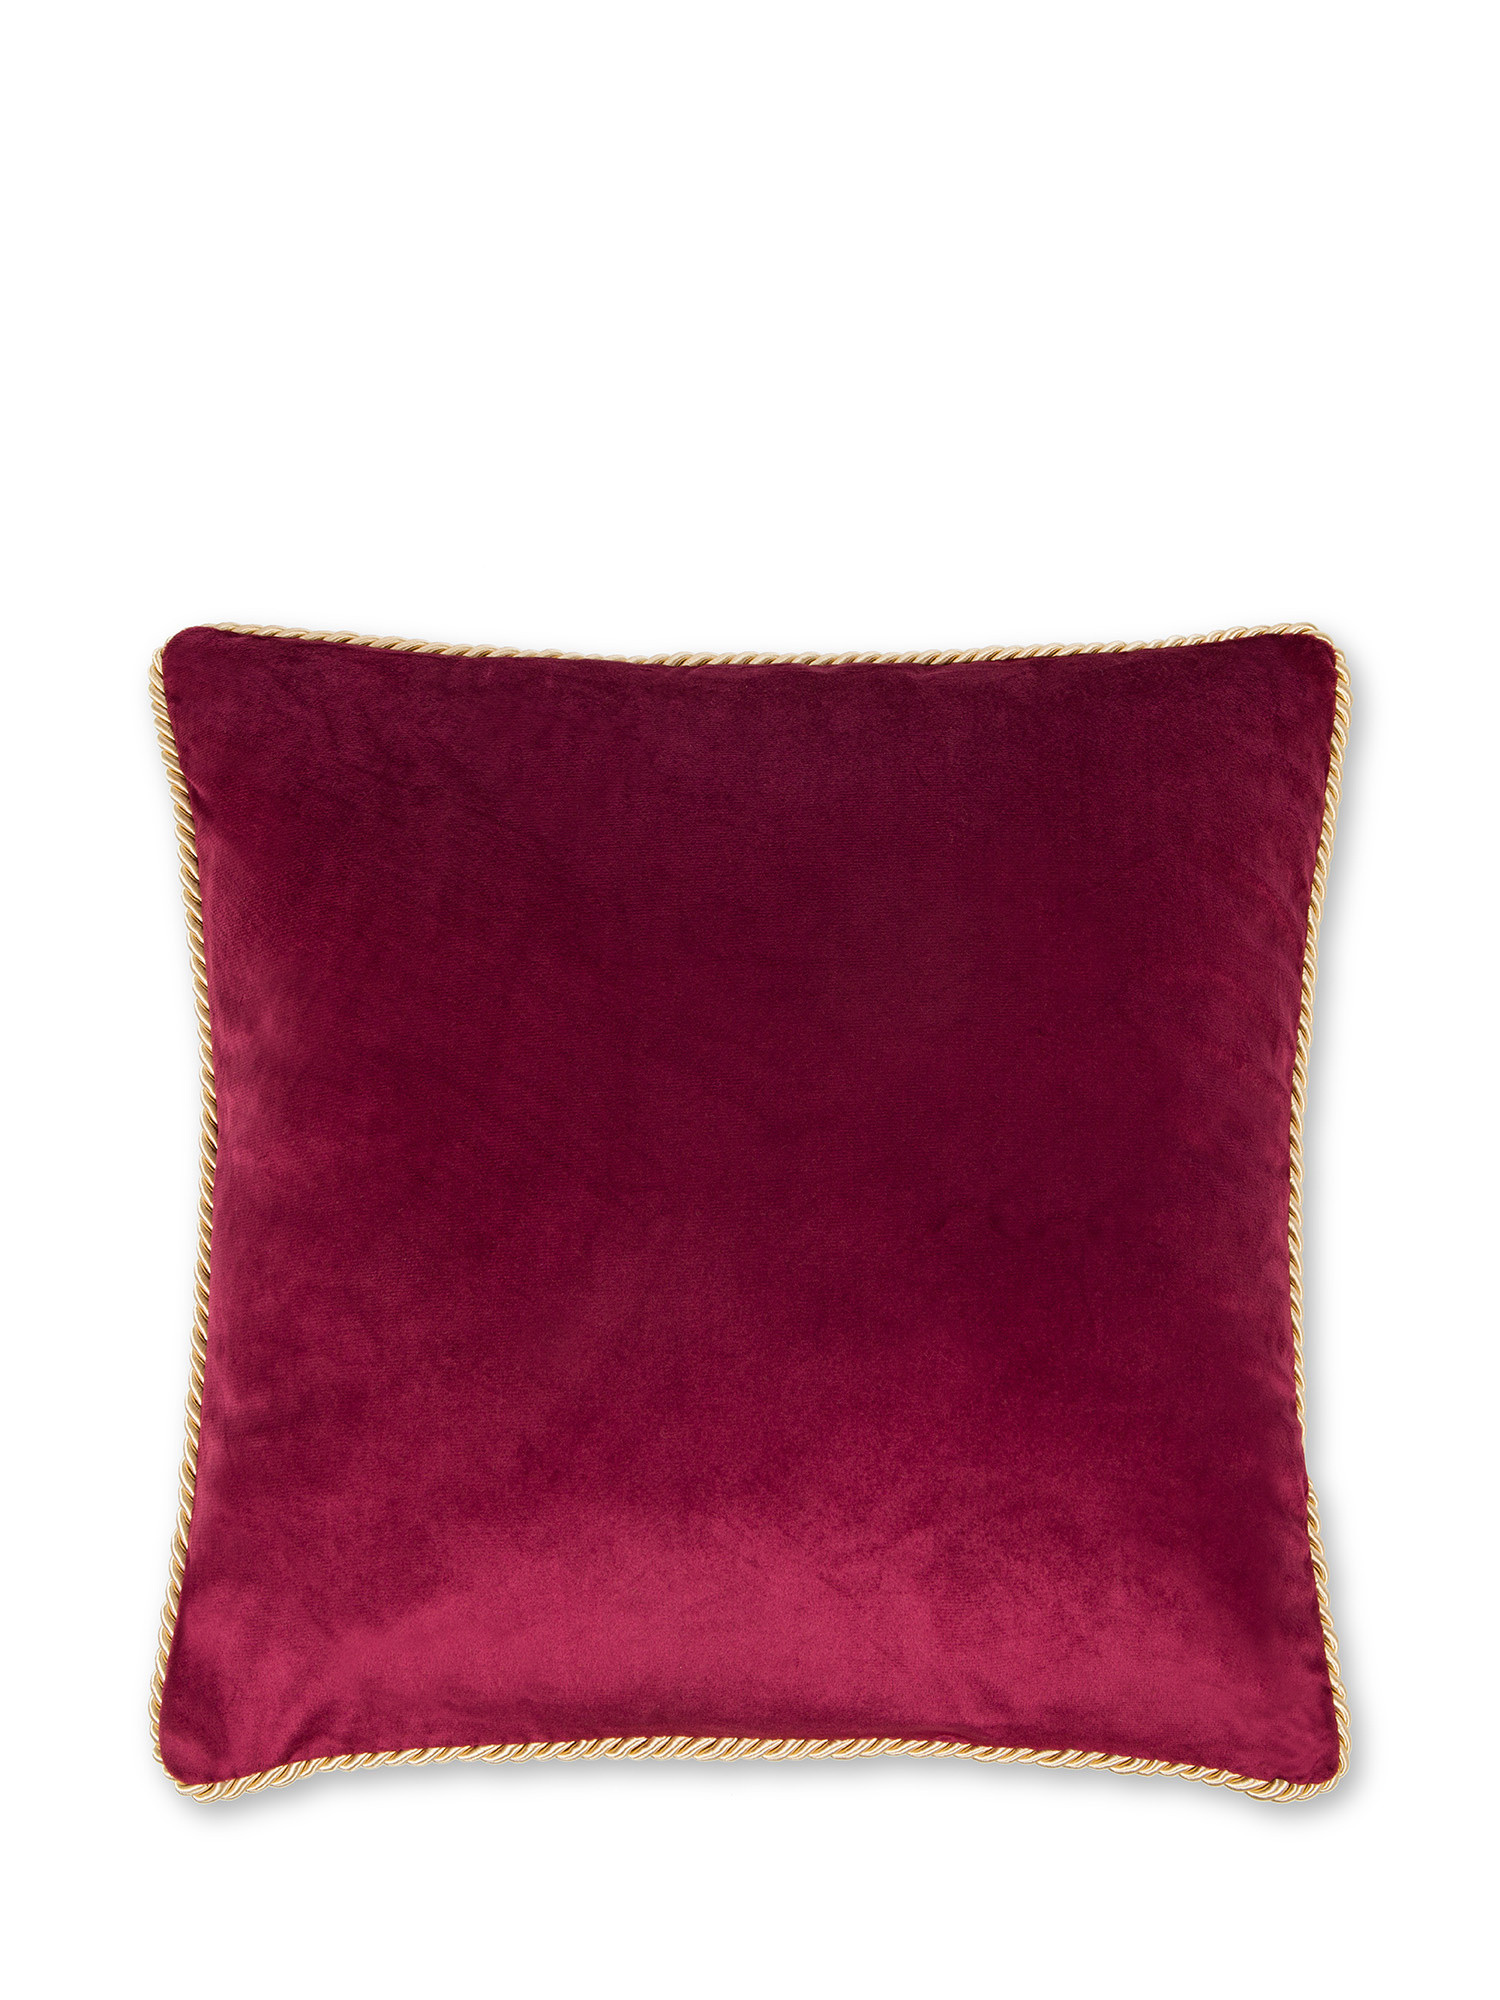 Cuscino velluto bicolore 45X45cm, Rosso bordeaux, large image number 0